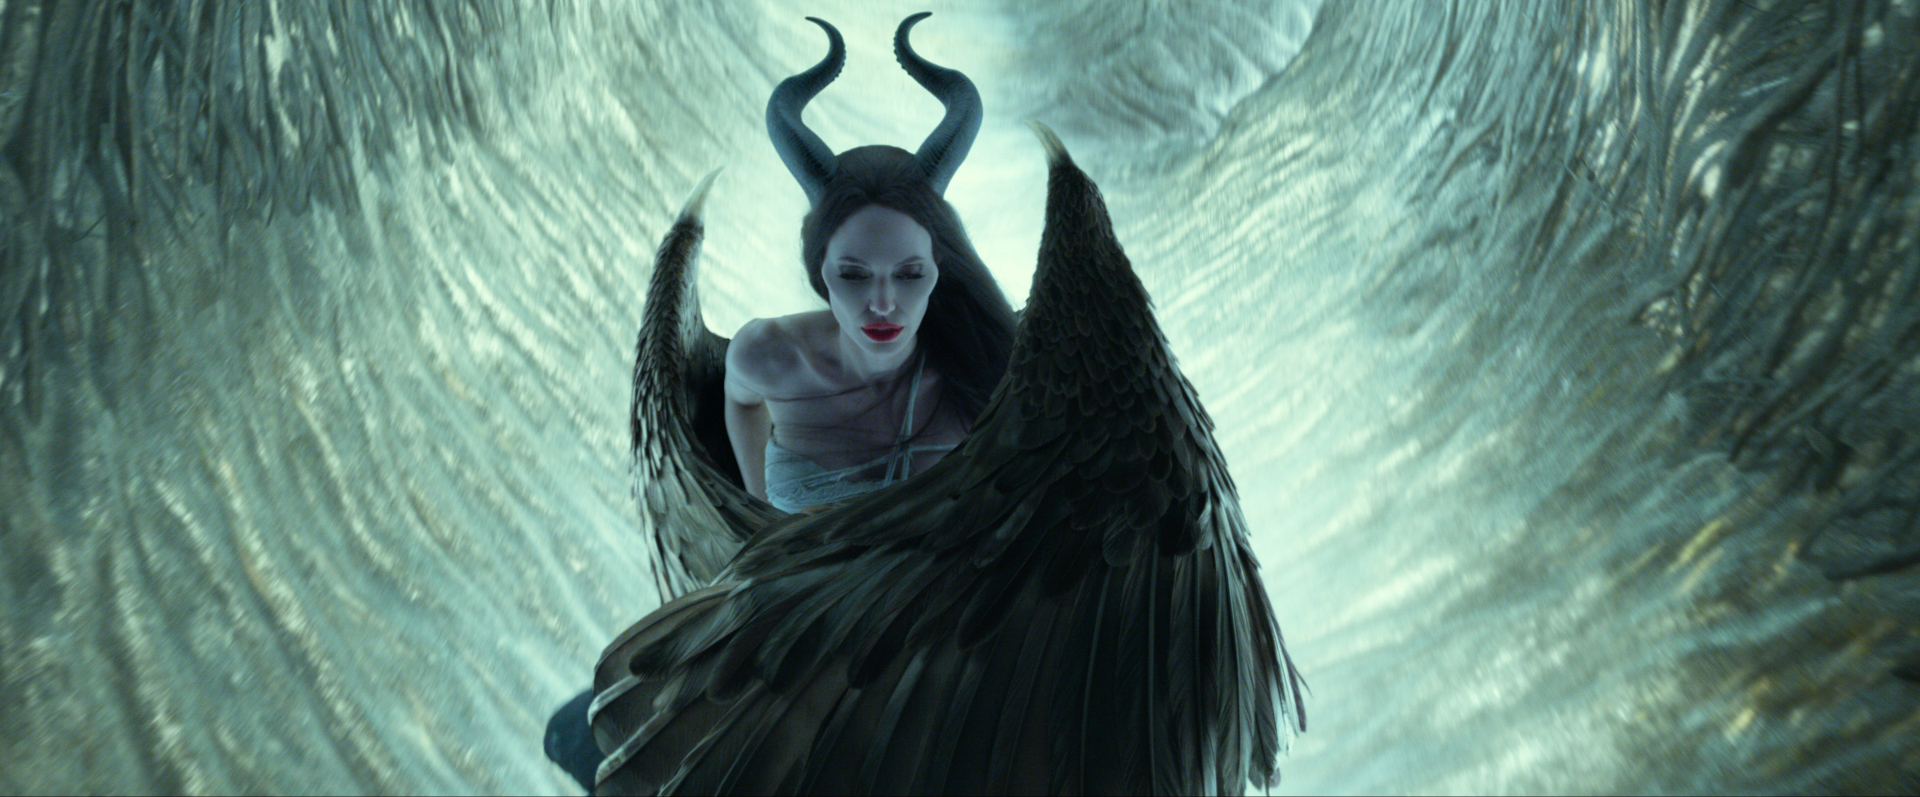 Maleficent Mistress Of Evil Torrent